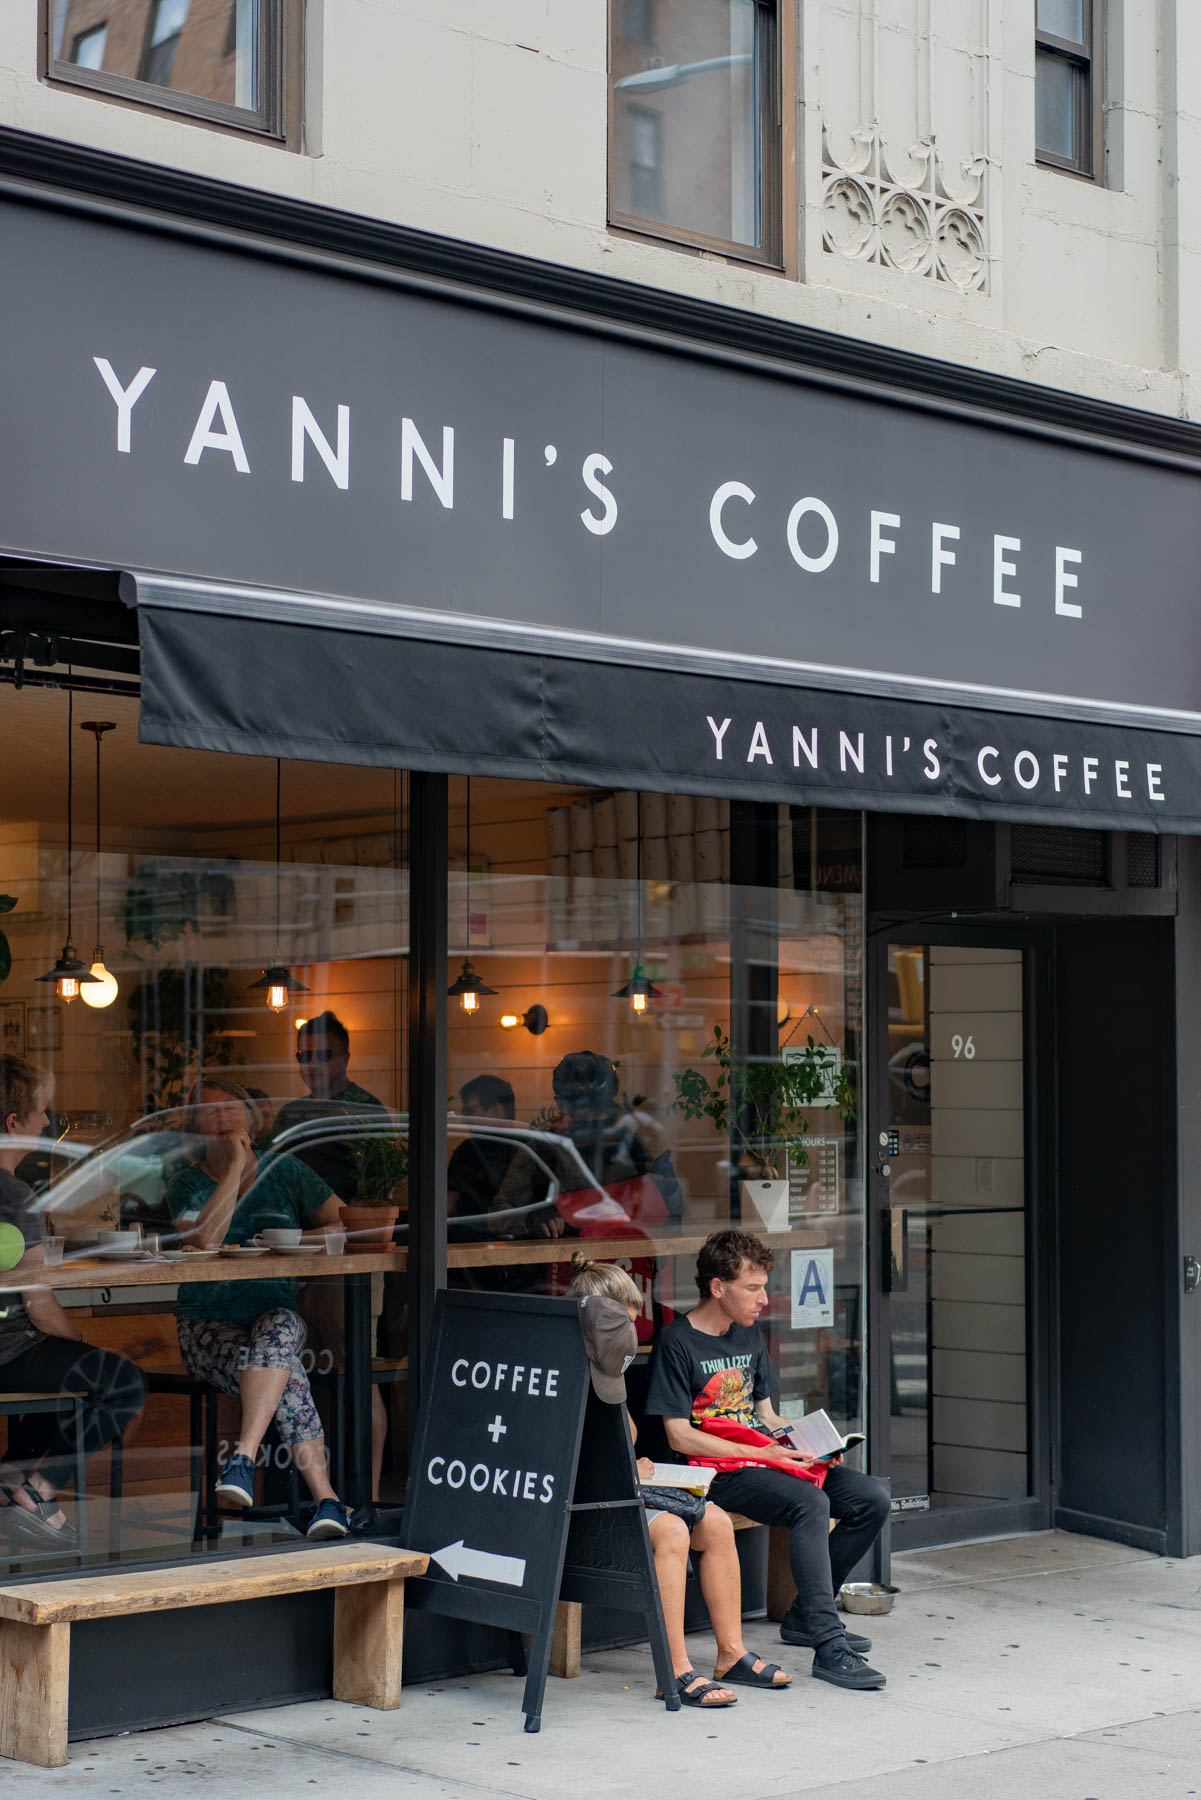 Yanni's Coffee in Chelsea